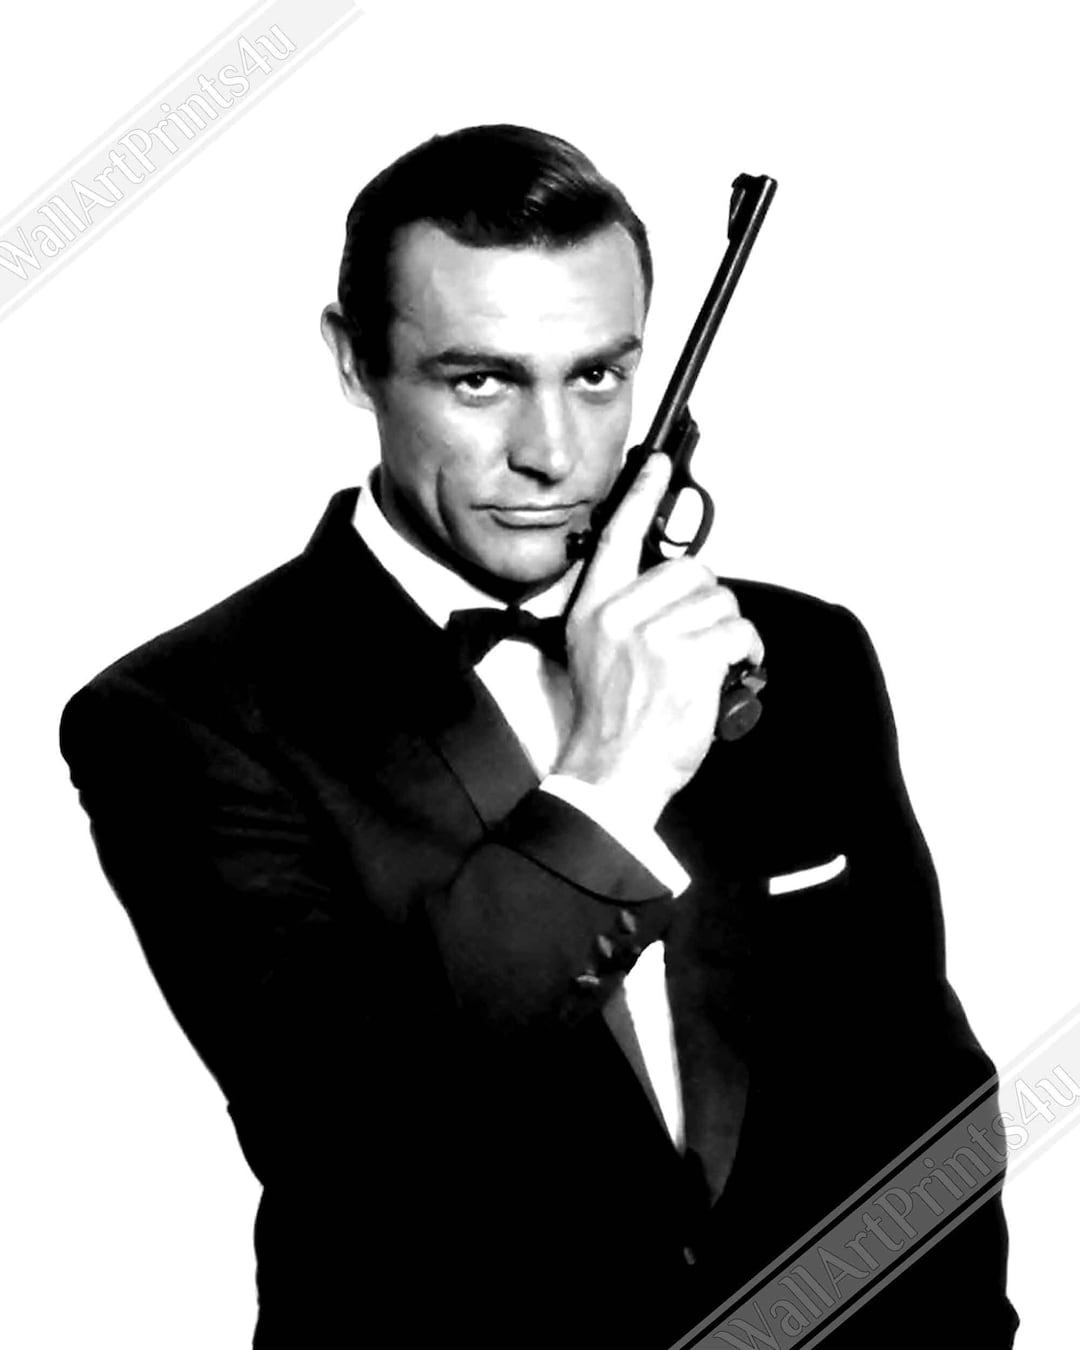 Sean Connery Poster, James Bond With Gun Poster, Vintage Photo Portrait ...